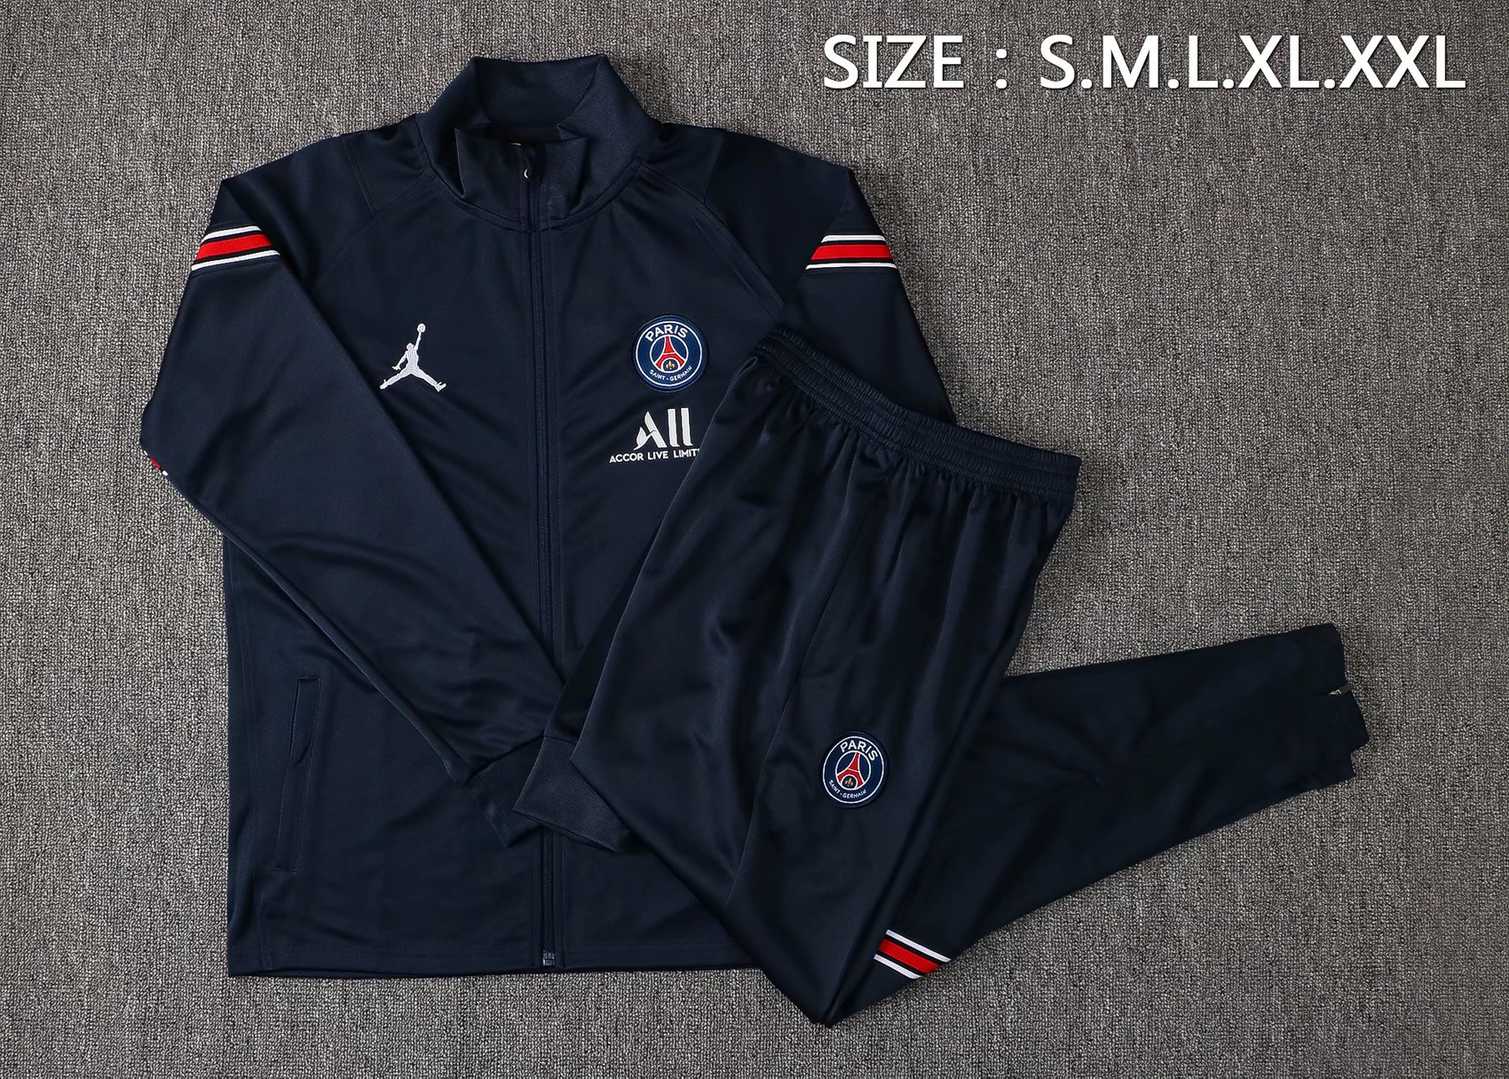 2021/22 PSG x Jordan Navy Soccer Training Suit (Jacket + Pants) Mens